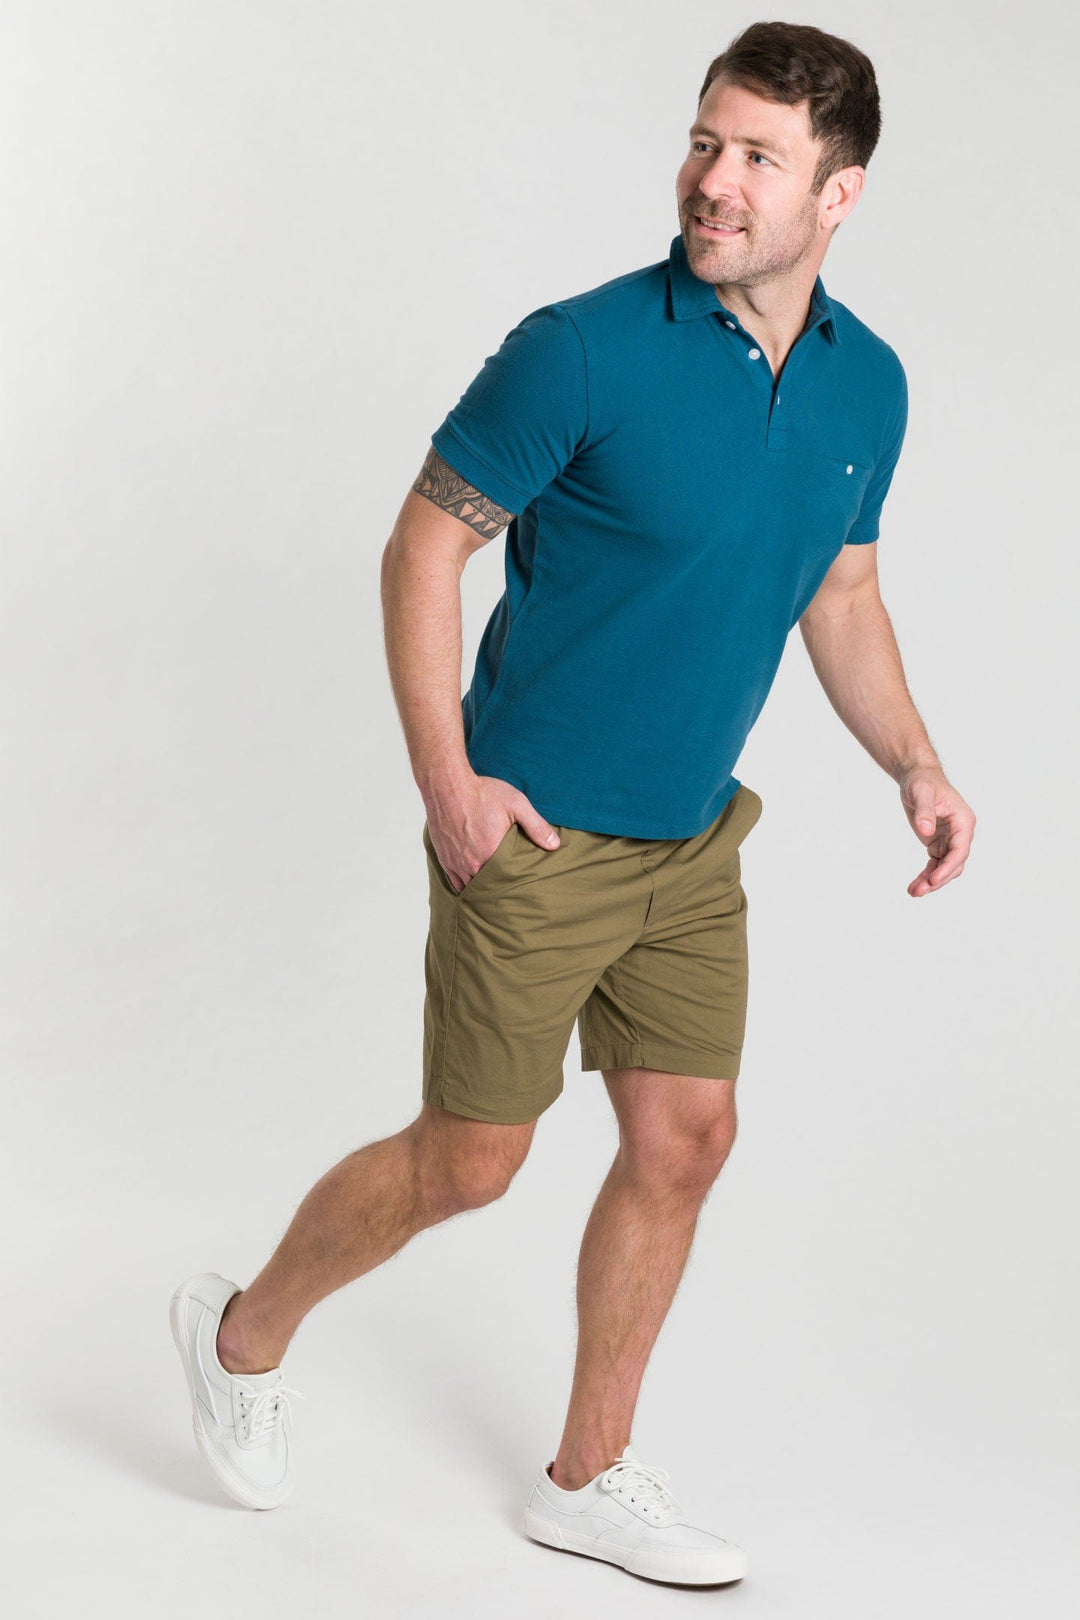 Buy Dark Olive Walking Shorts for Short Men | Ash & Erie   Walking Shorts